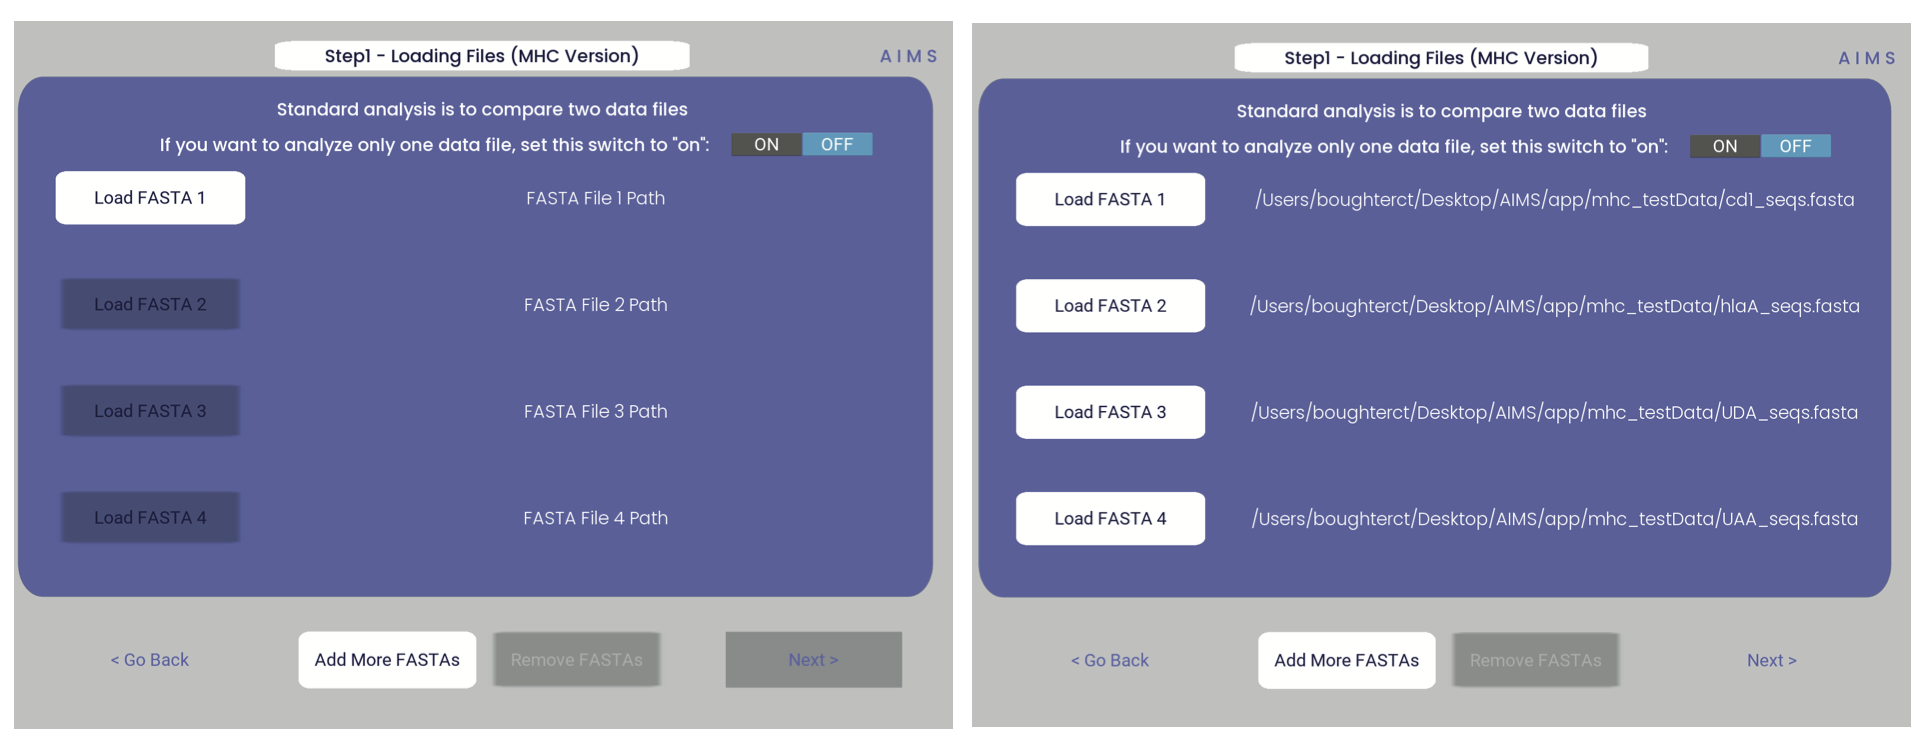 Example screenshots of the AIMS matrix generation step